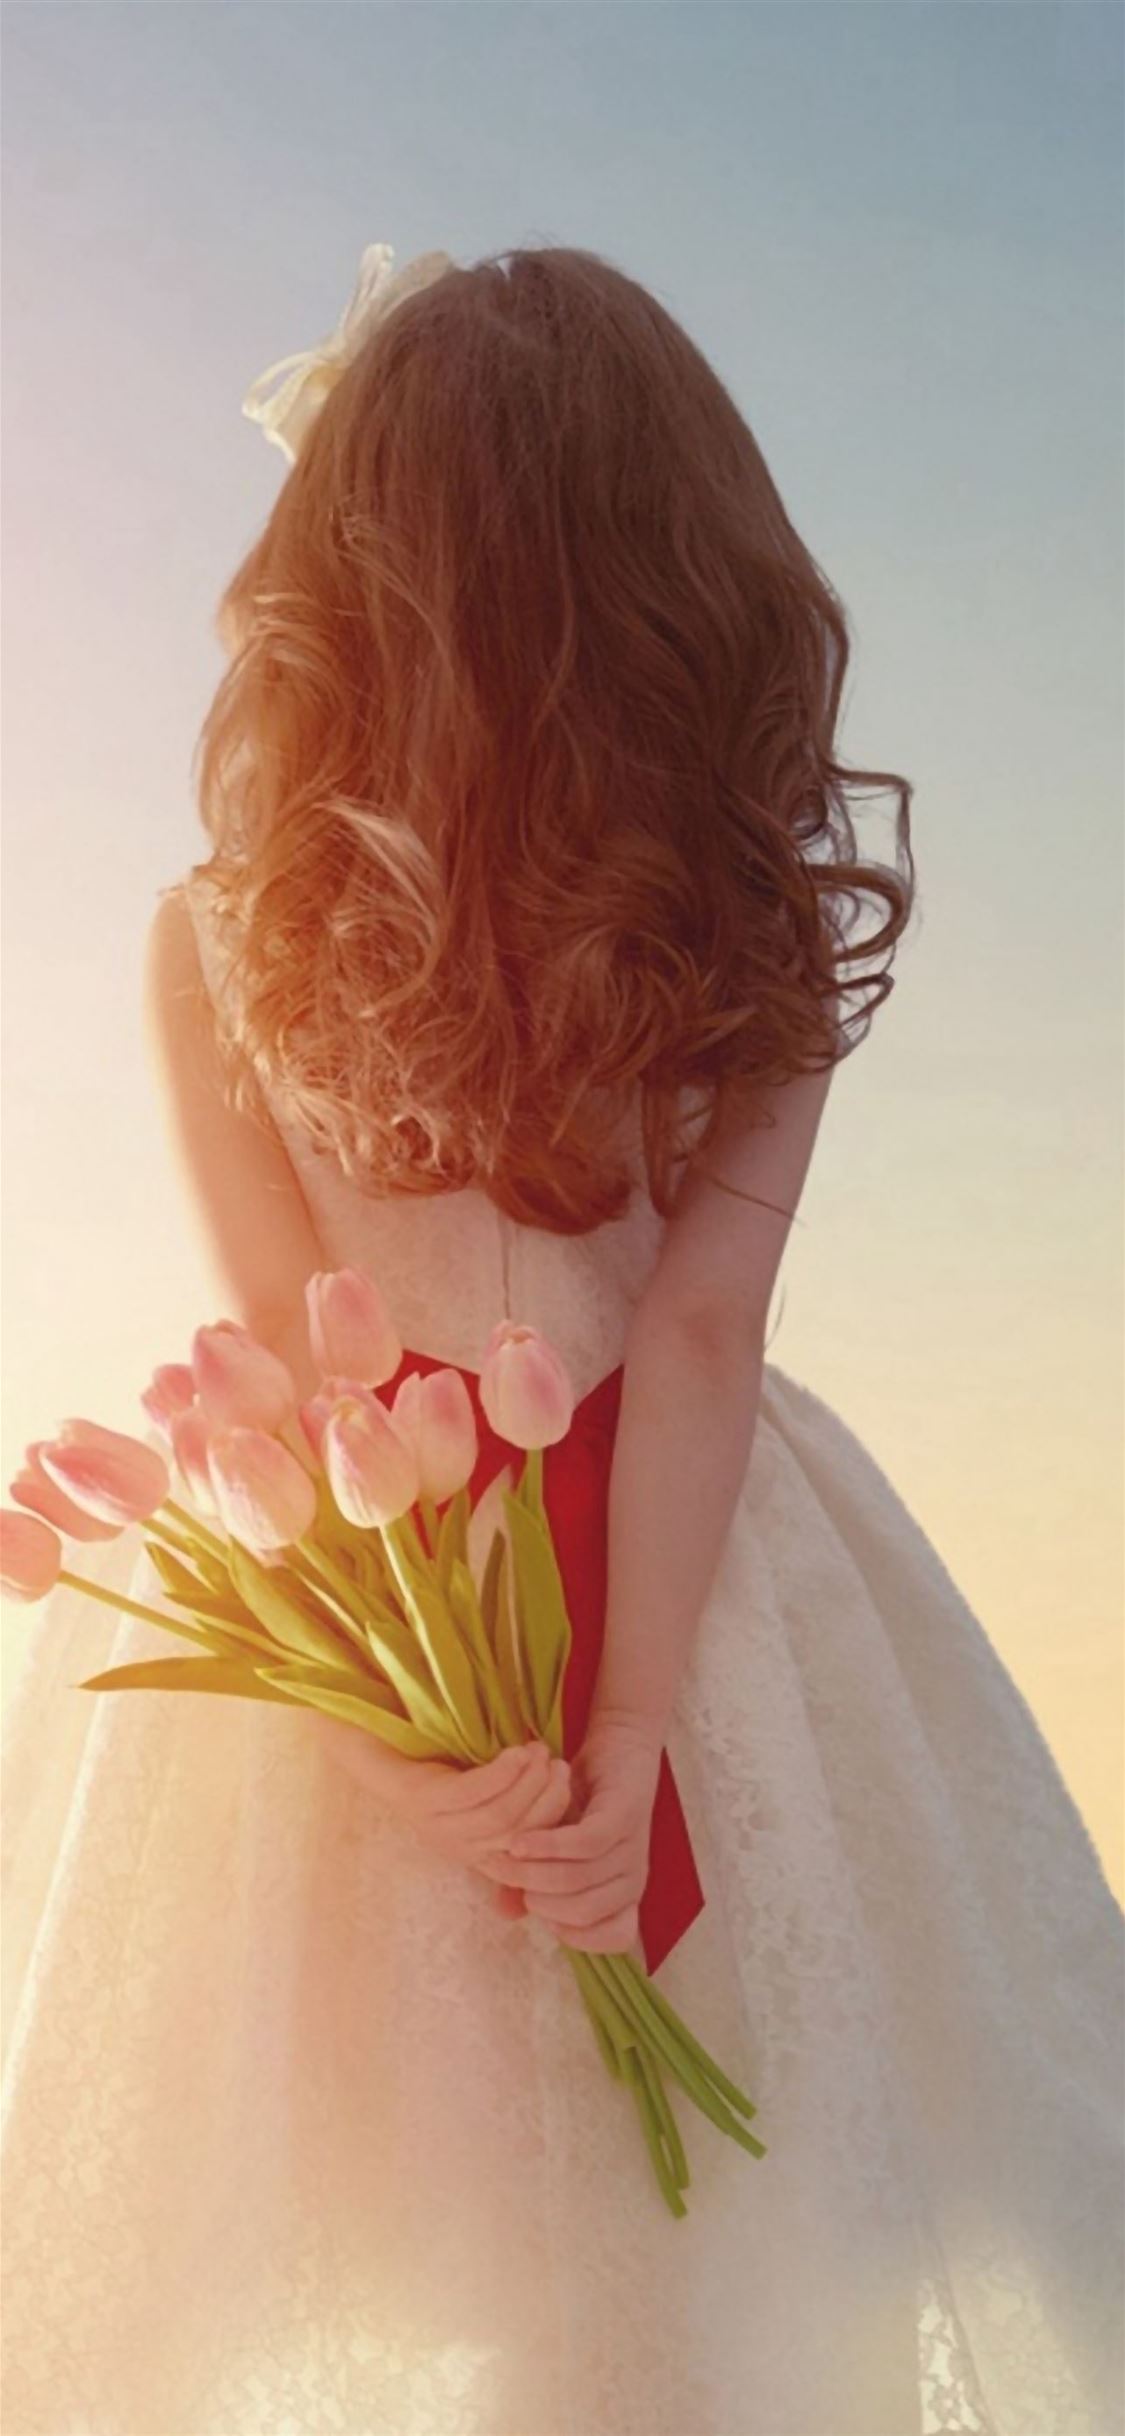 Romantic Girl And Rose iPhone wallpaper 